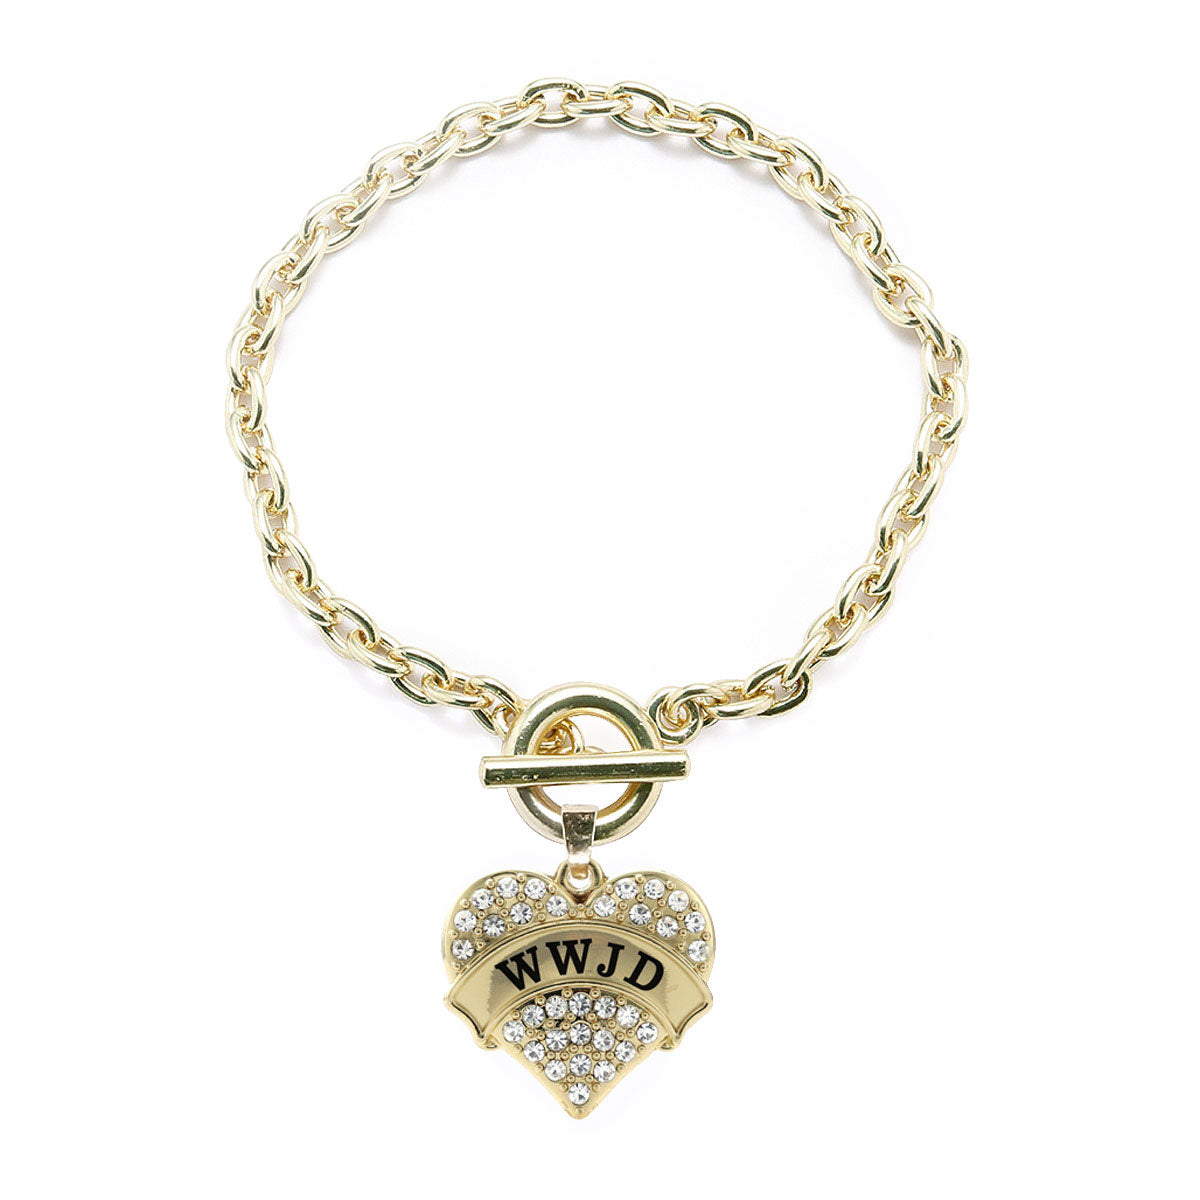 Gold WWJD Pave Heart Charm Toggle Bracelet